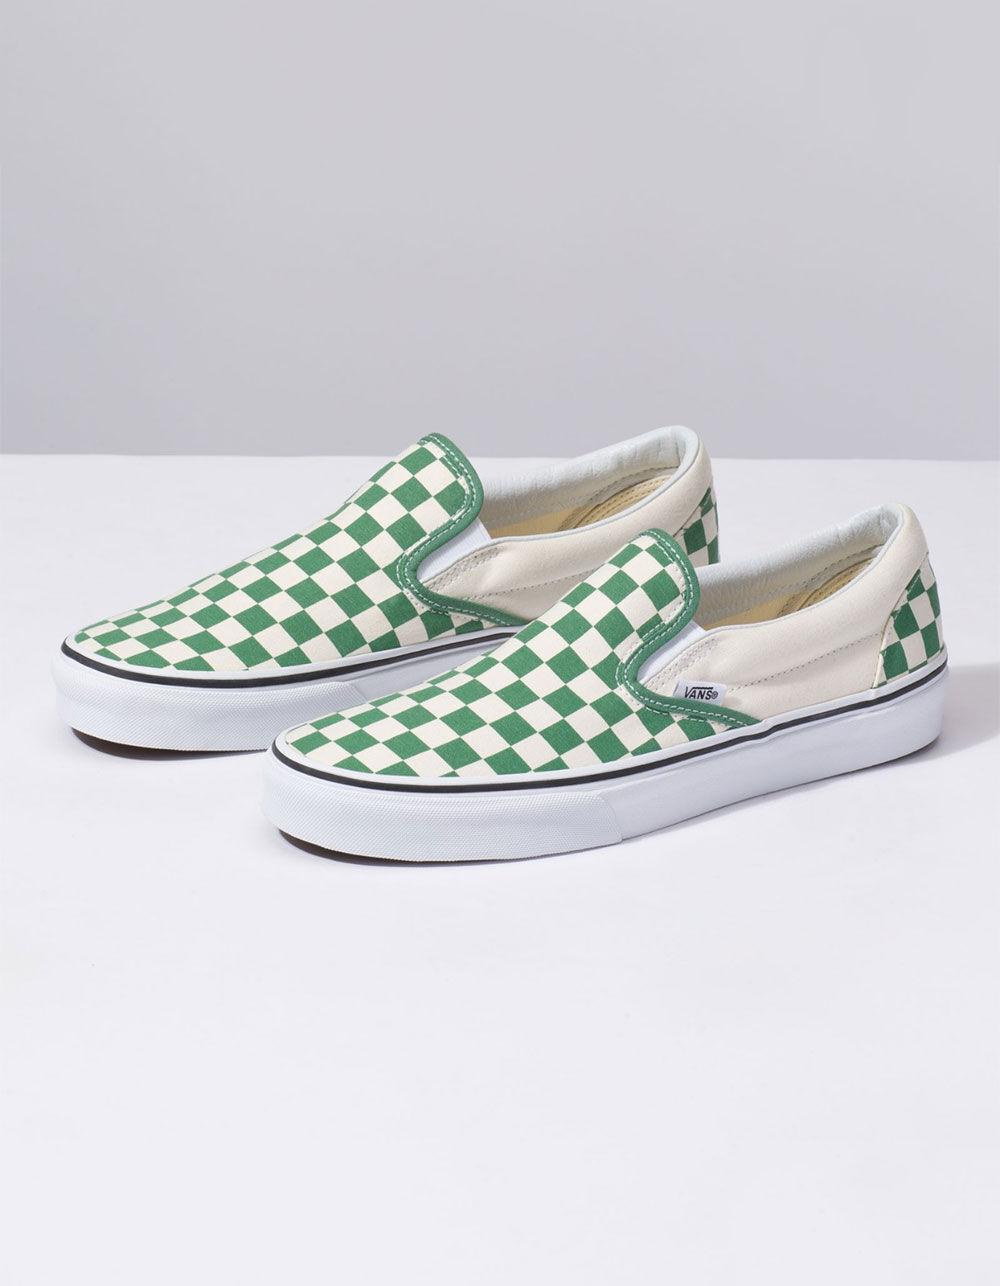 Vans Canvas Classic Slip-on Deep Grass Green Shoes for Men - Lyst